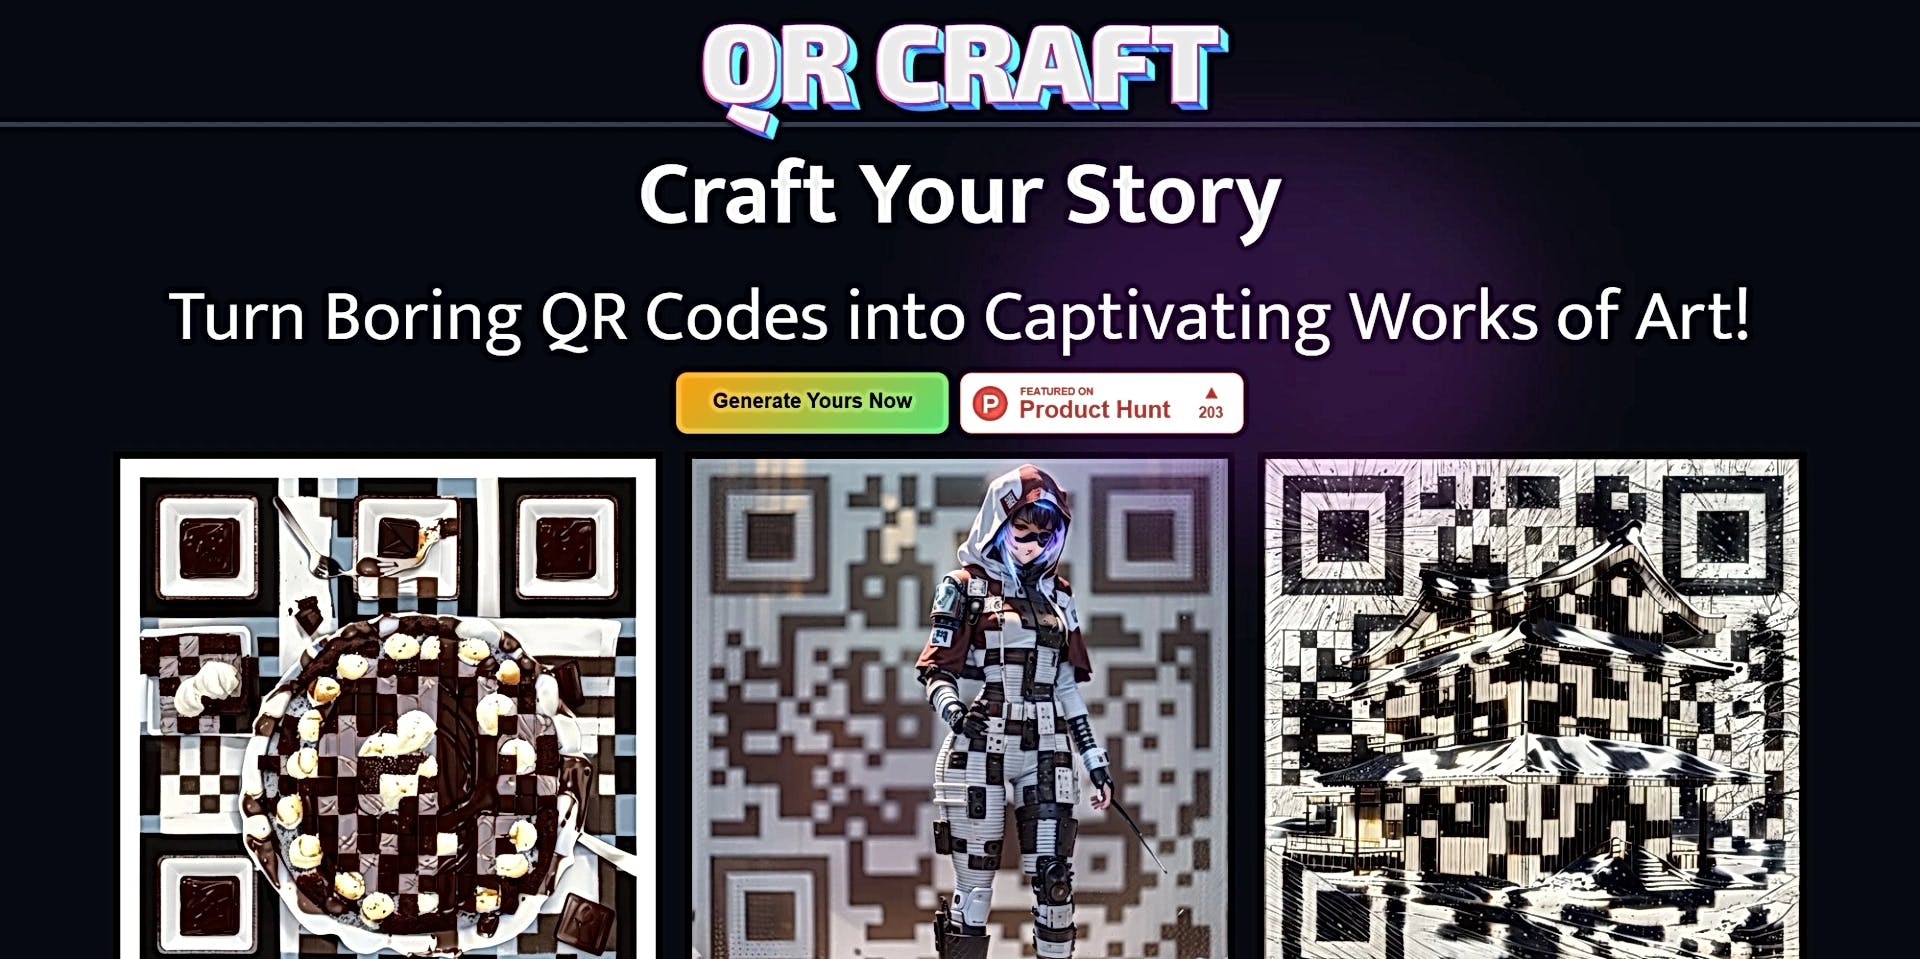 QR Craft featured